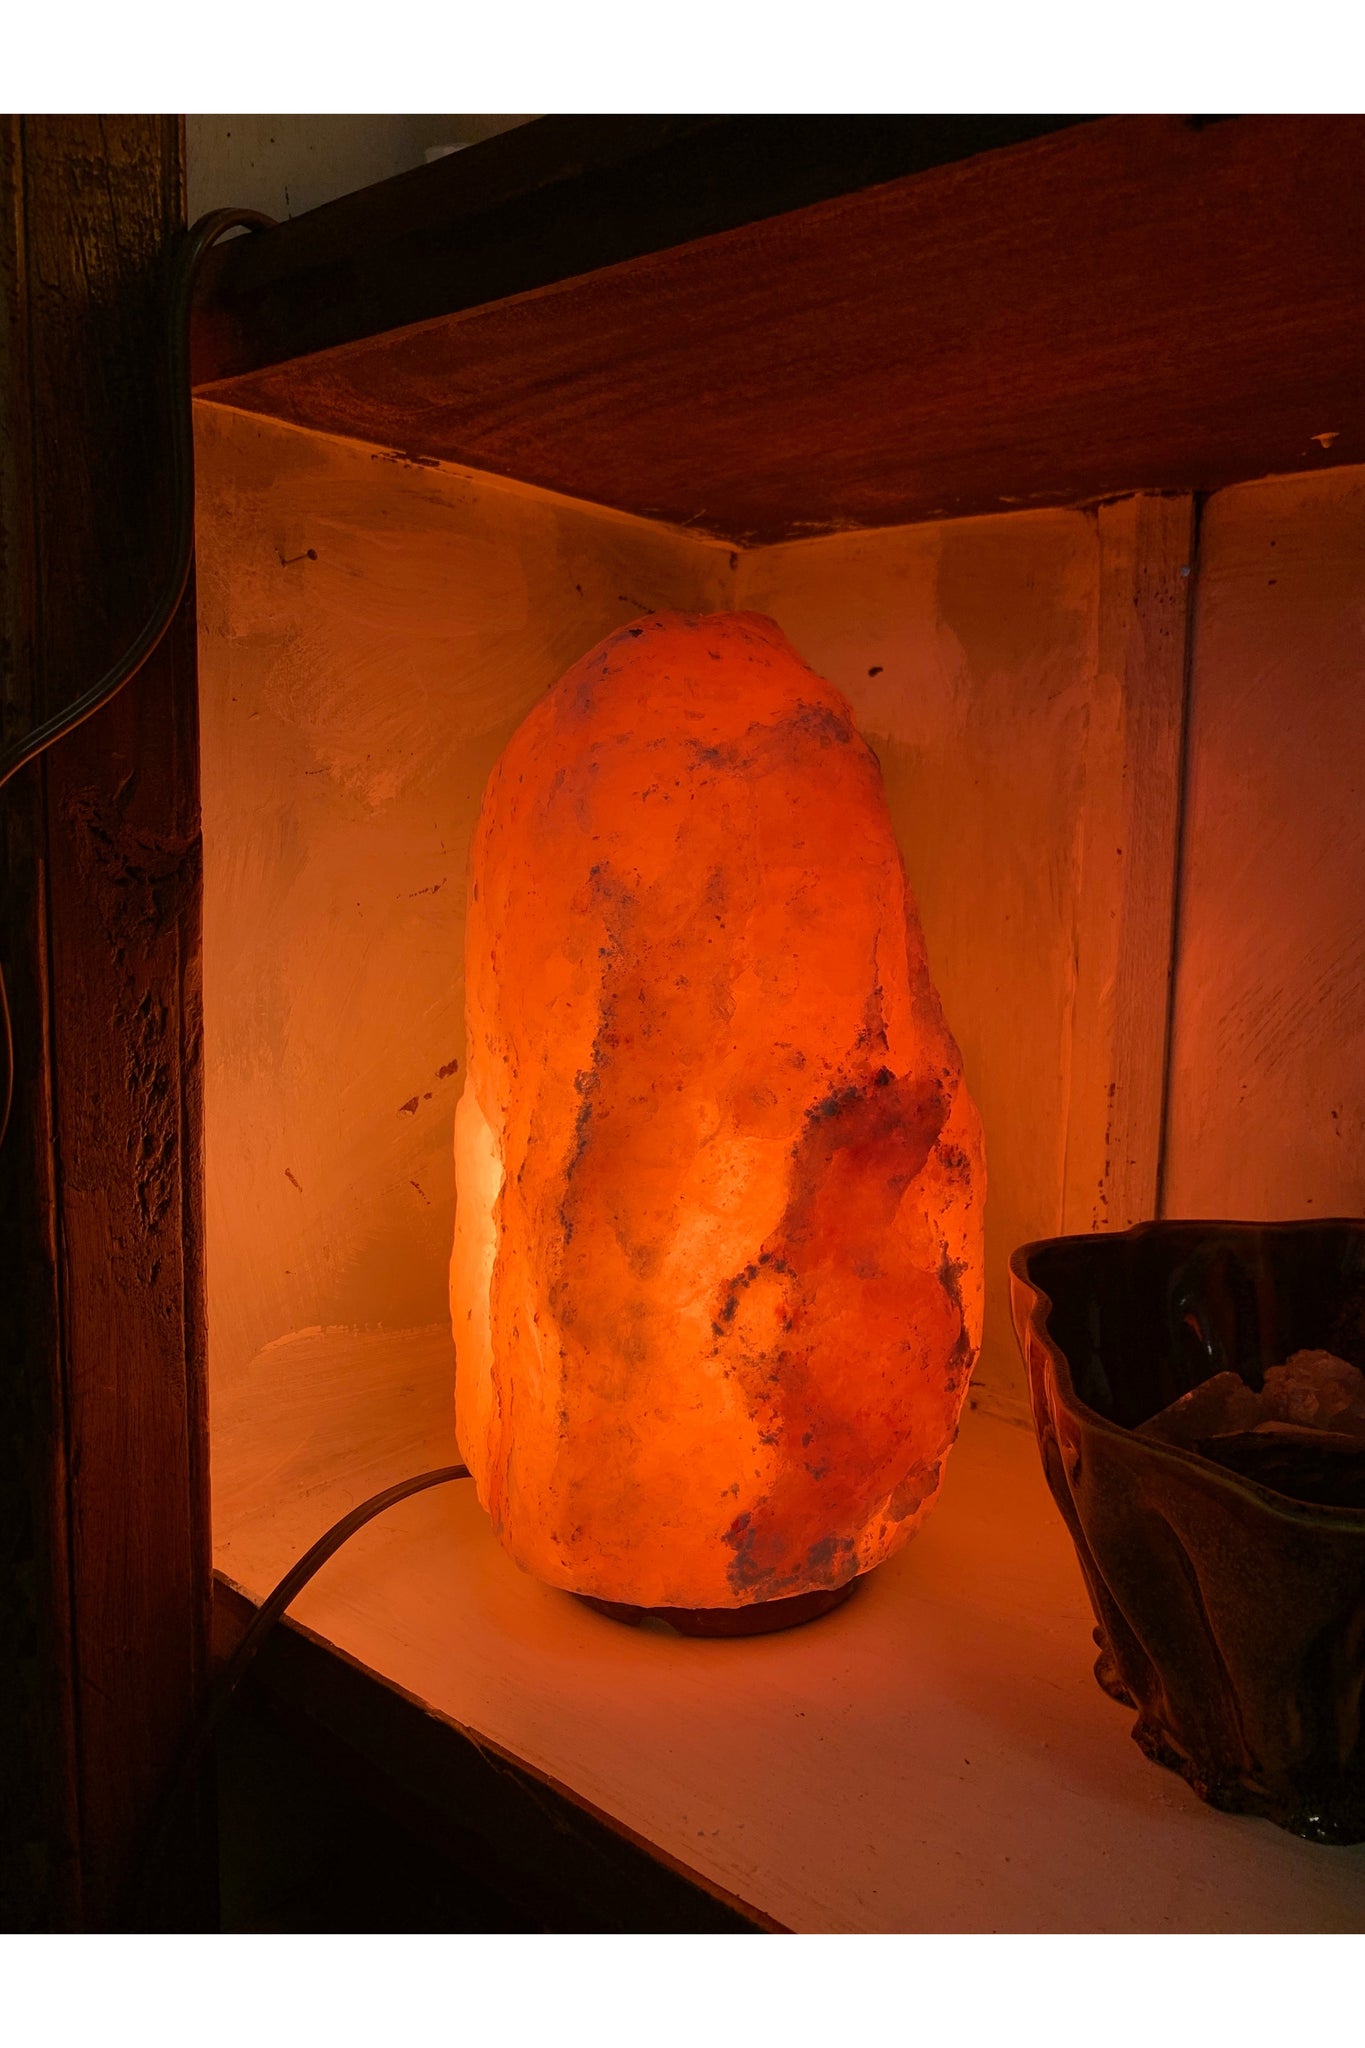 Large Salt Lamps (24-28 lbs) Himalayan Salt Lamps Majestic Hudson Lifestyle Experiences Home Decor